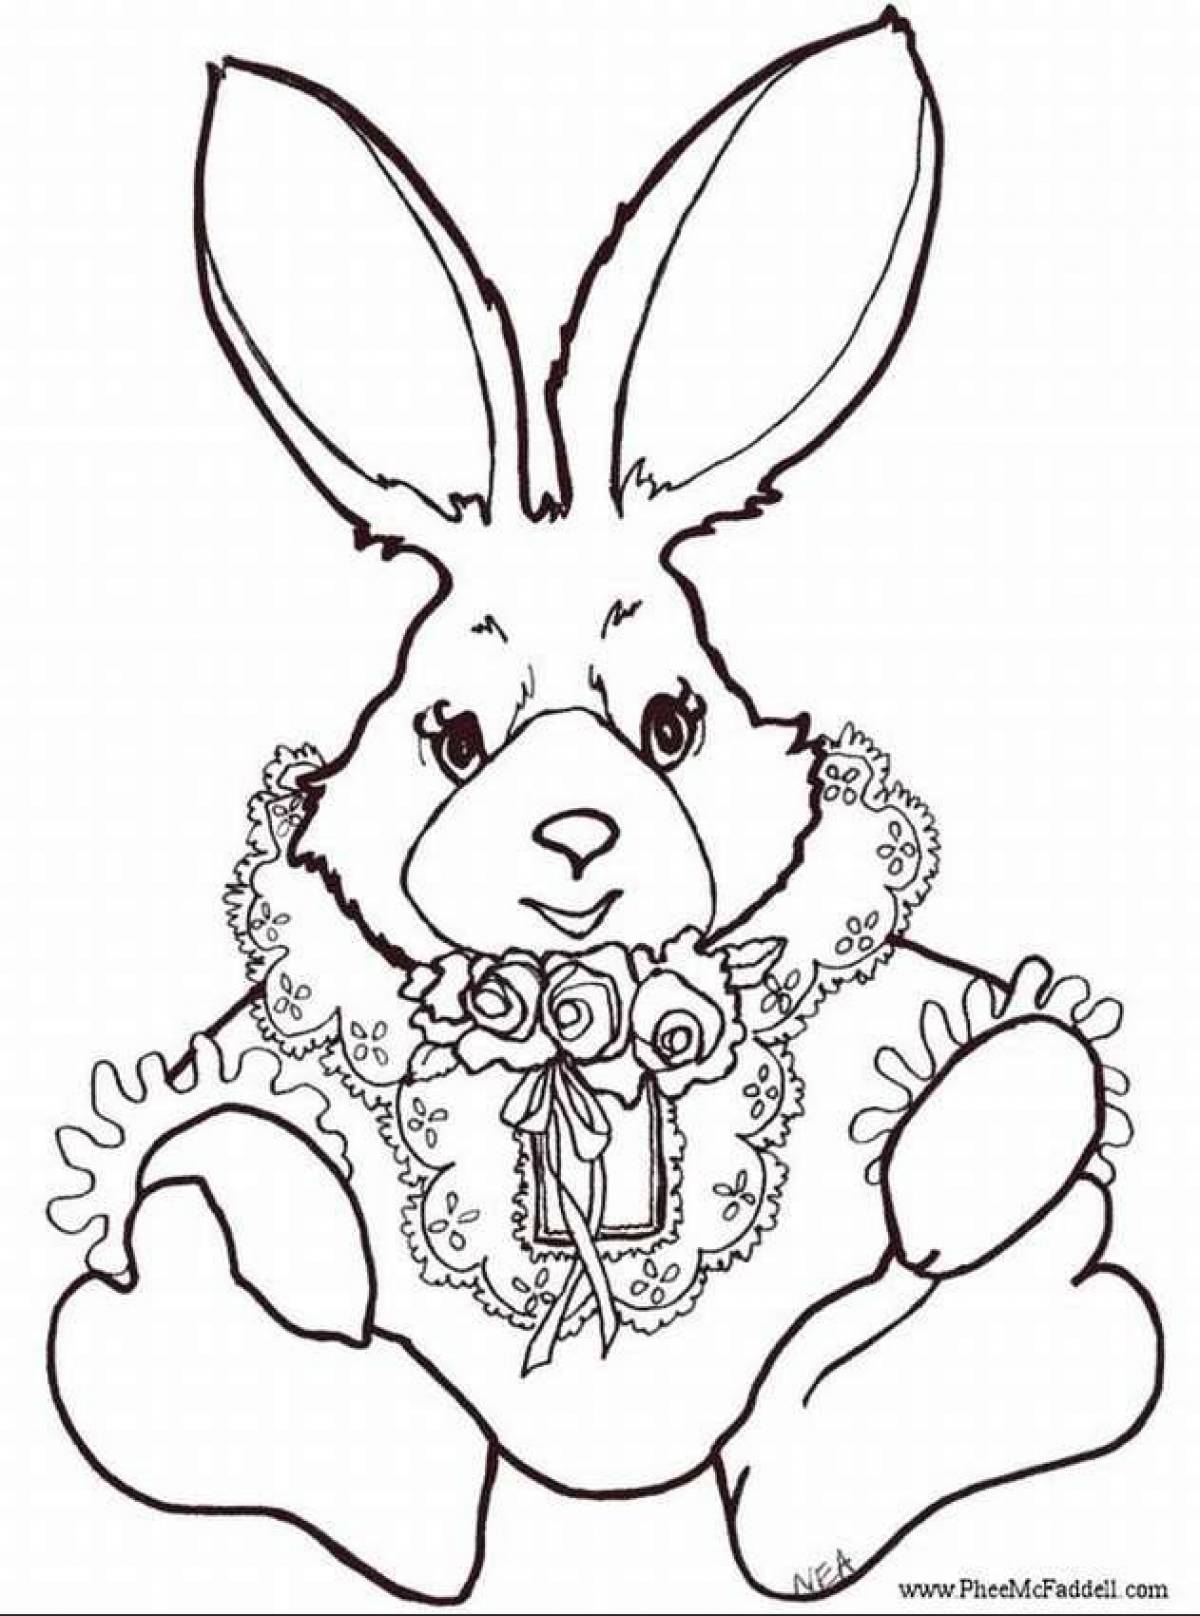 Christmas bunny coloring page